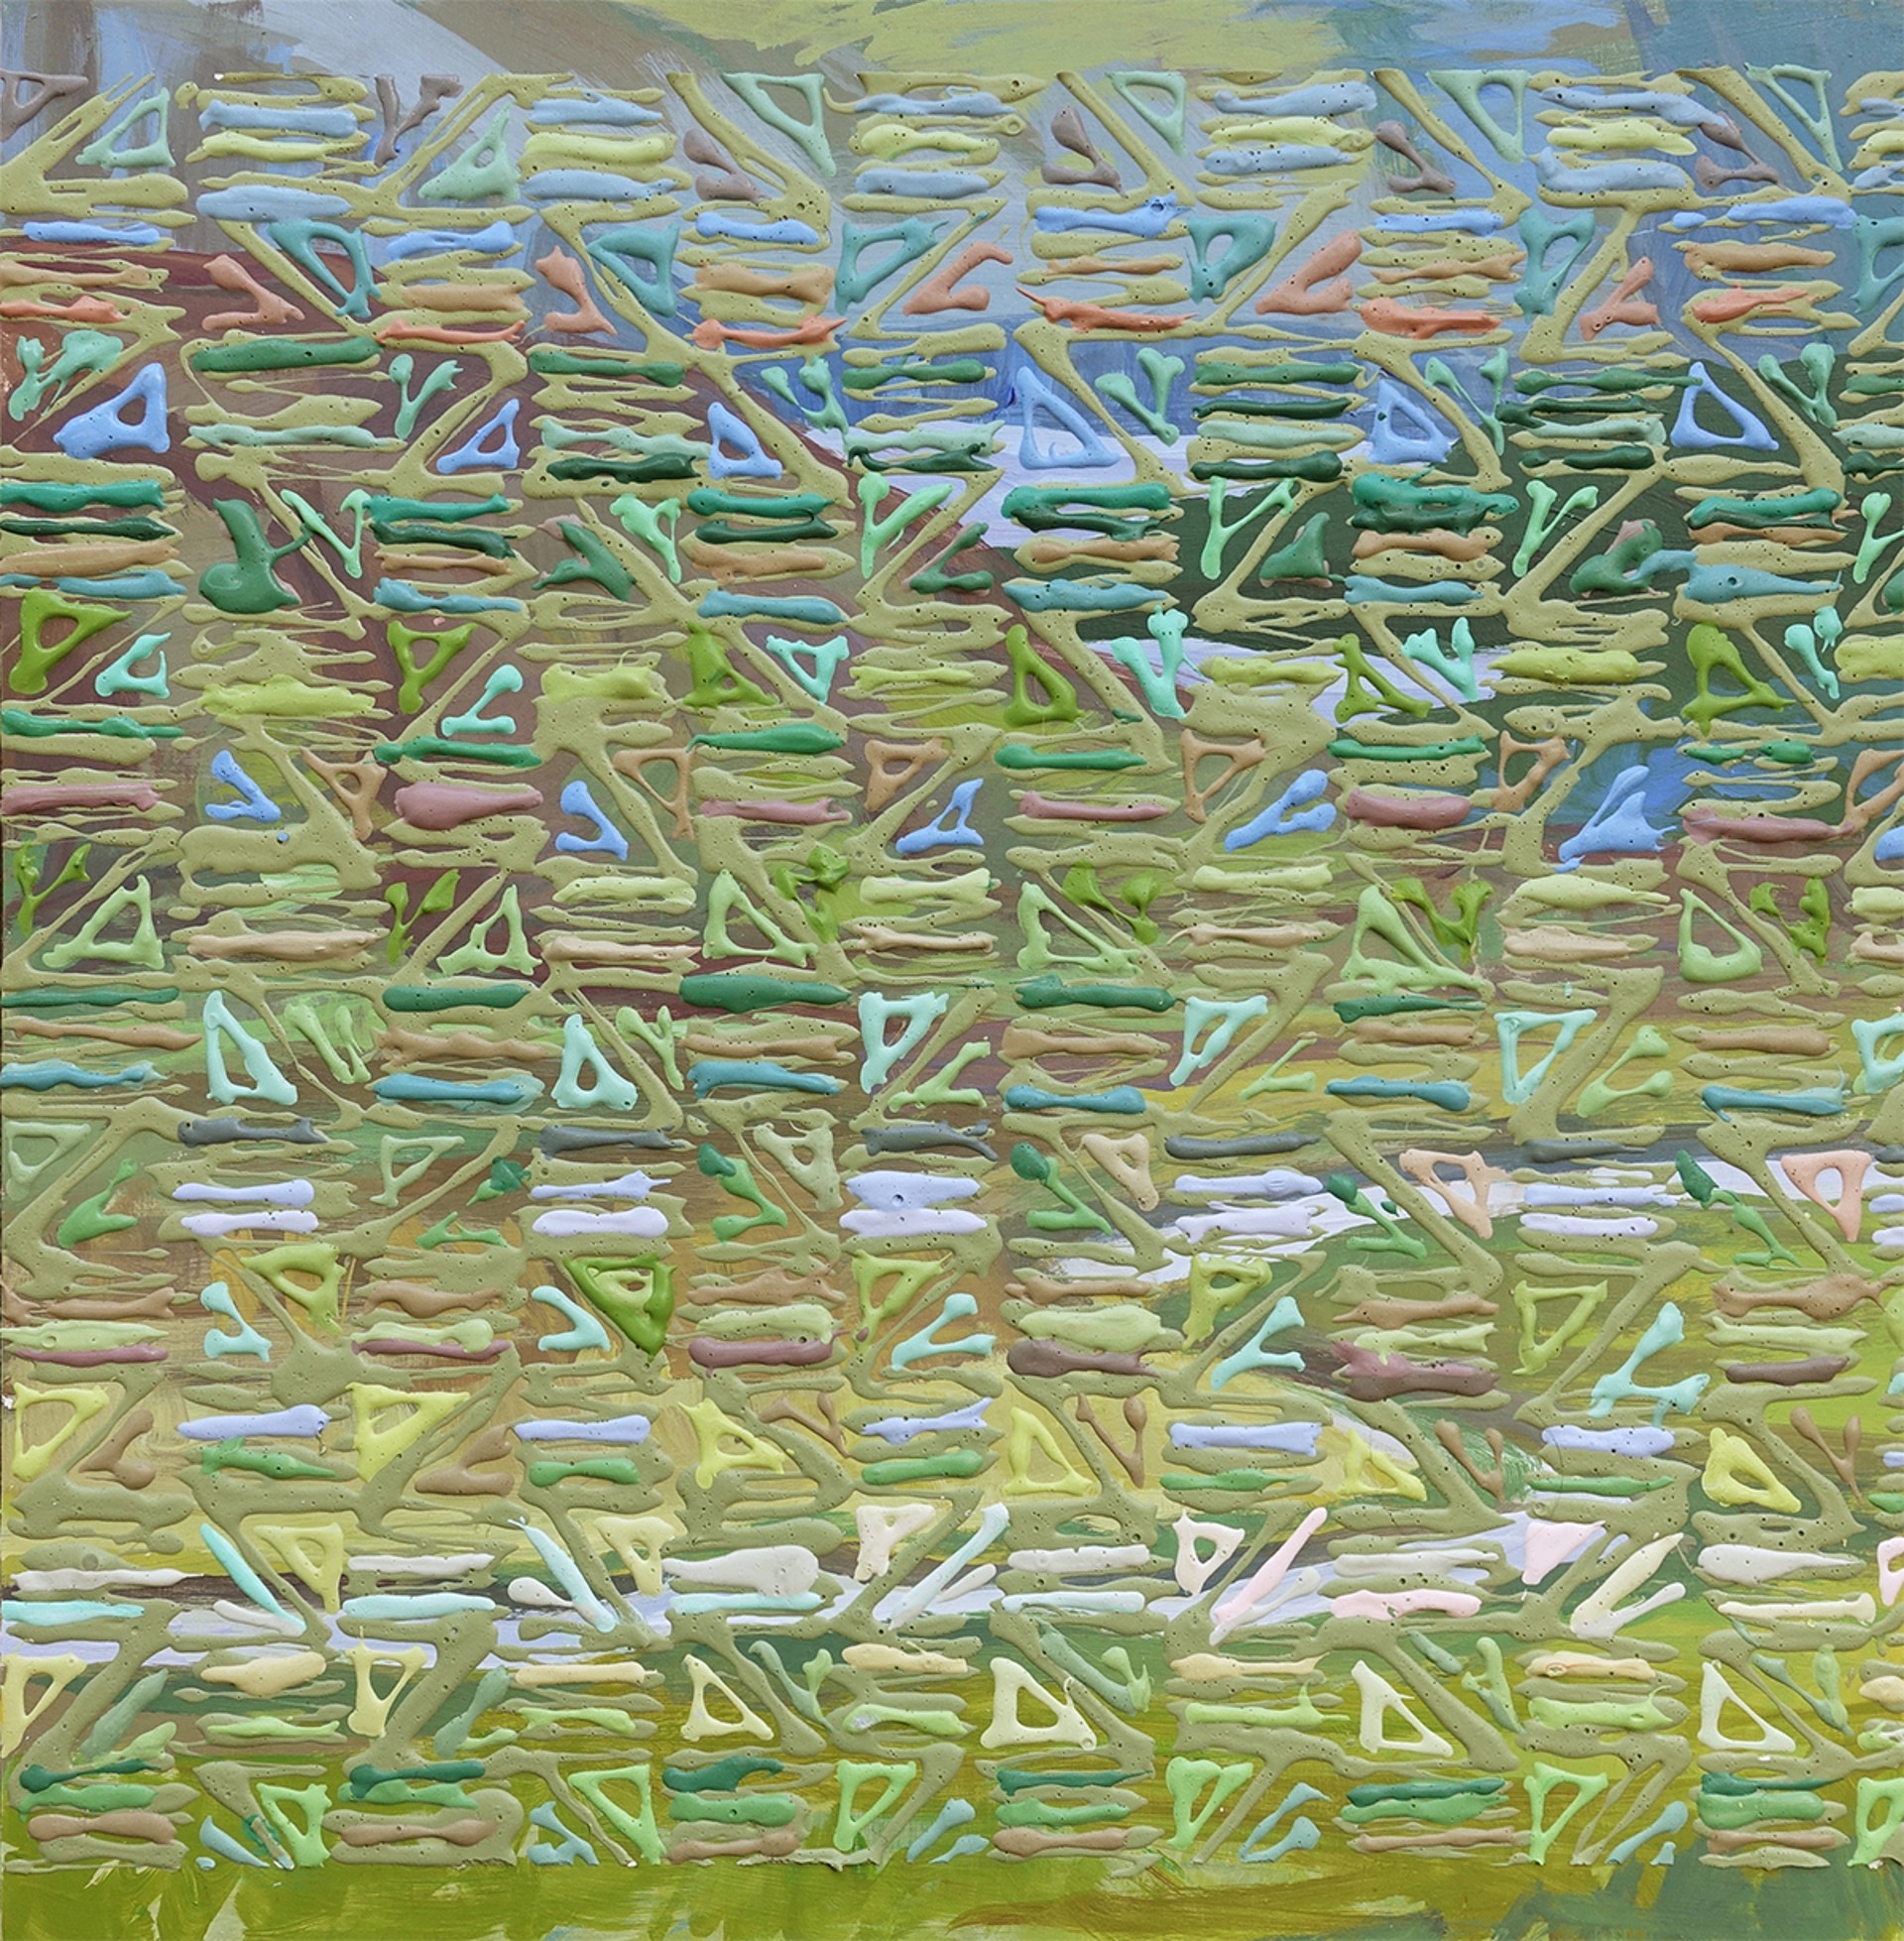 Fragmented Landscape 1 (Skaftafellsjökull) by Amanda Joy Brown